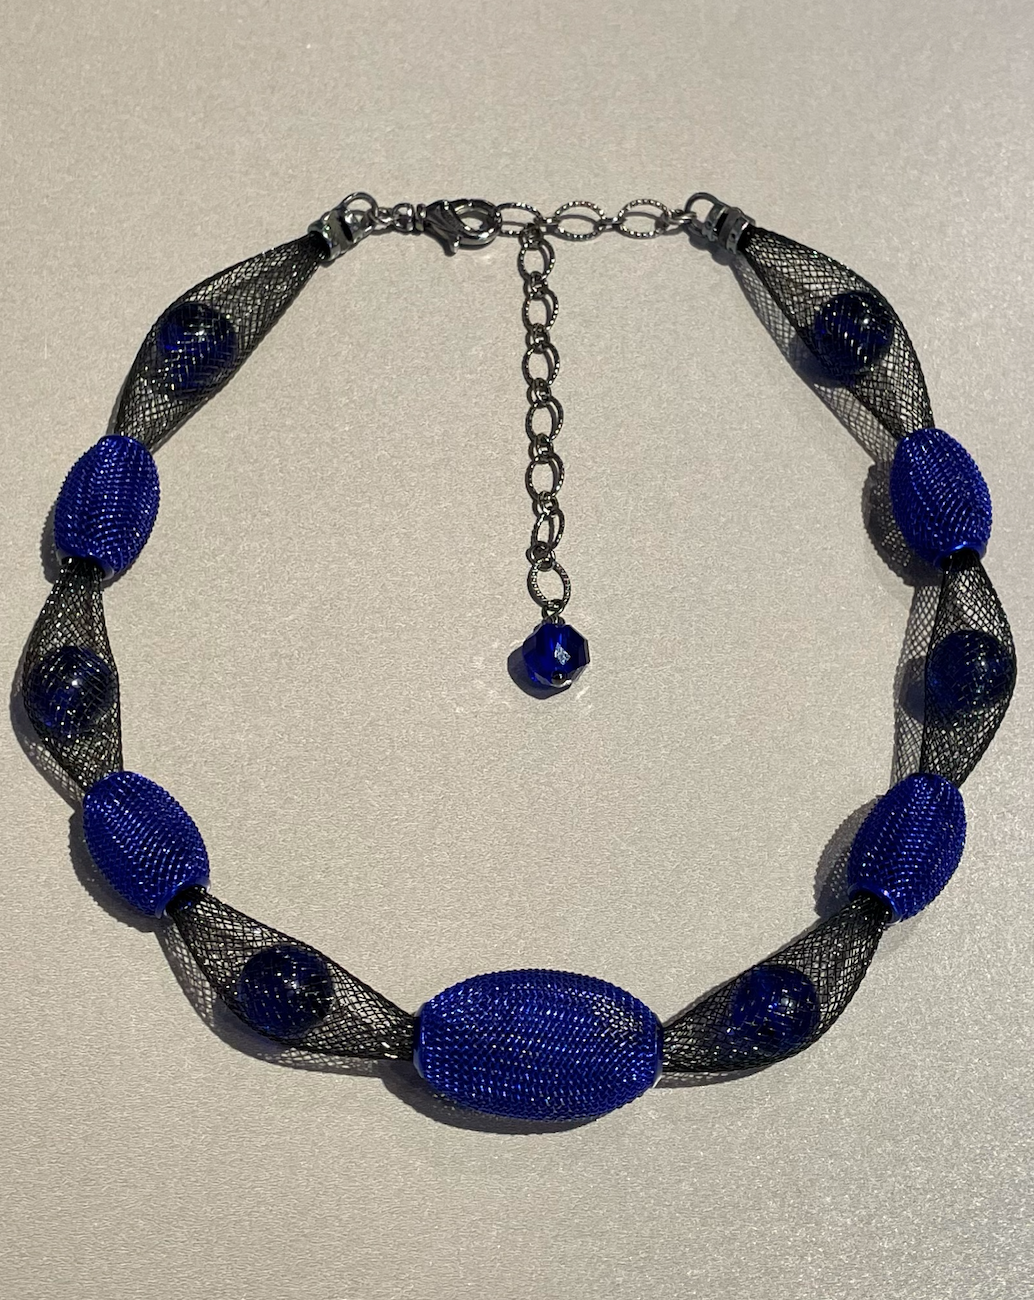 Cobalt Blue and Black Mesh Necklace